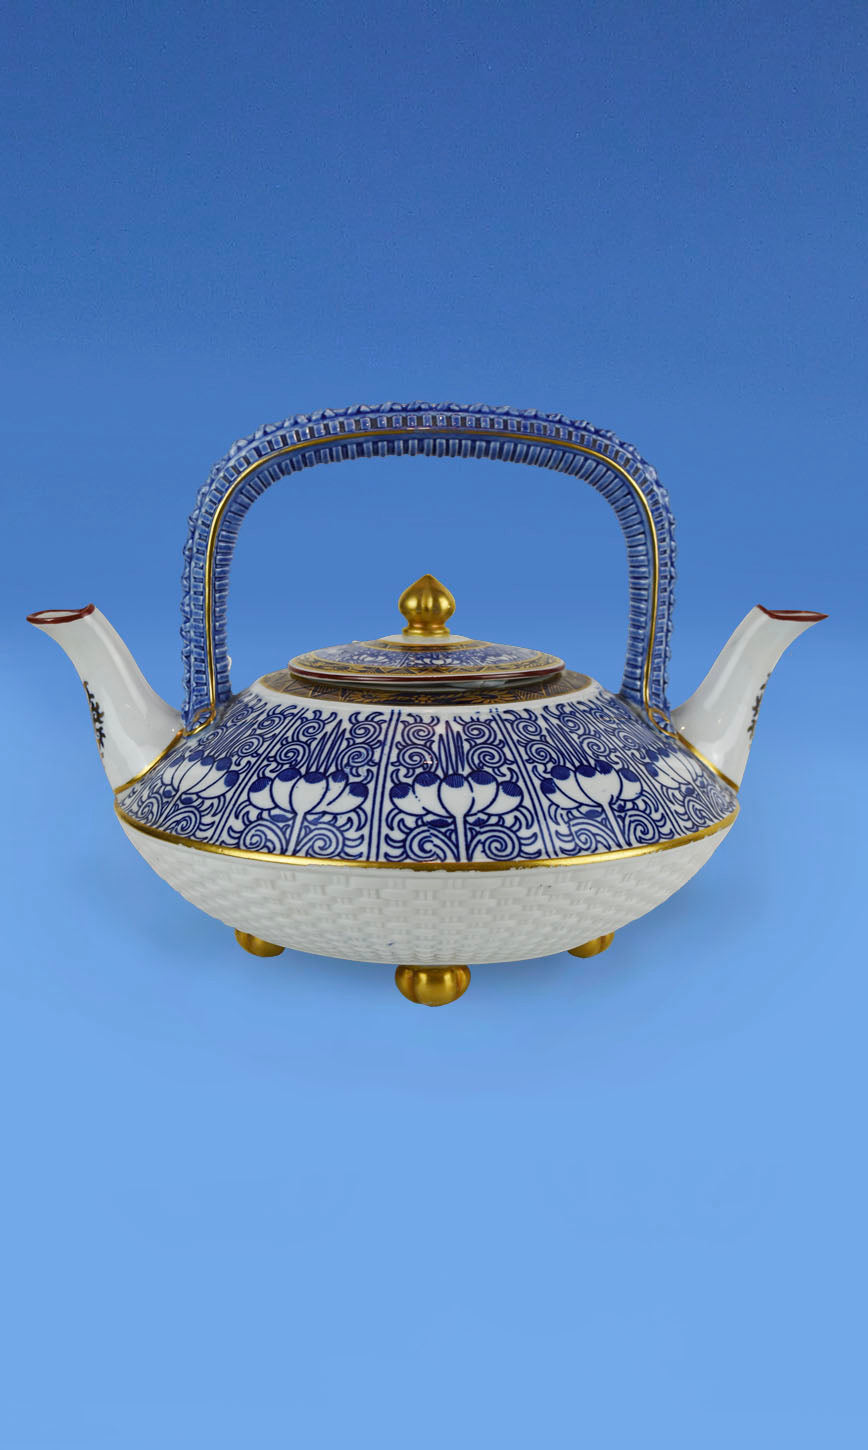 Royal Worcester Porcelain Aesthetic Movement 'Royal Lily' Double Spouted Teapot c.1879